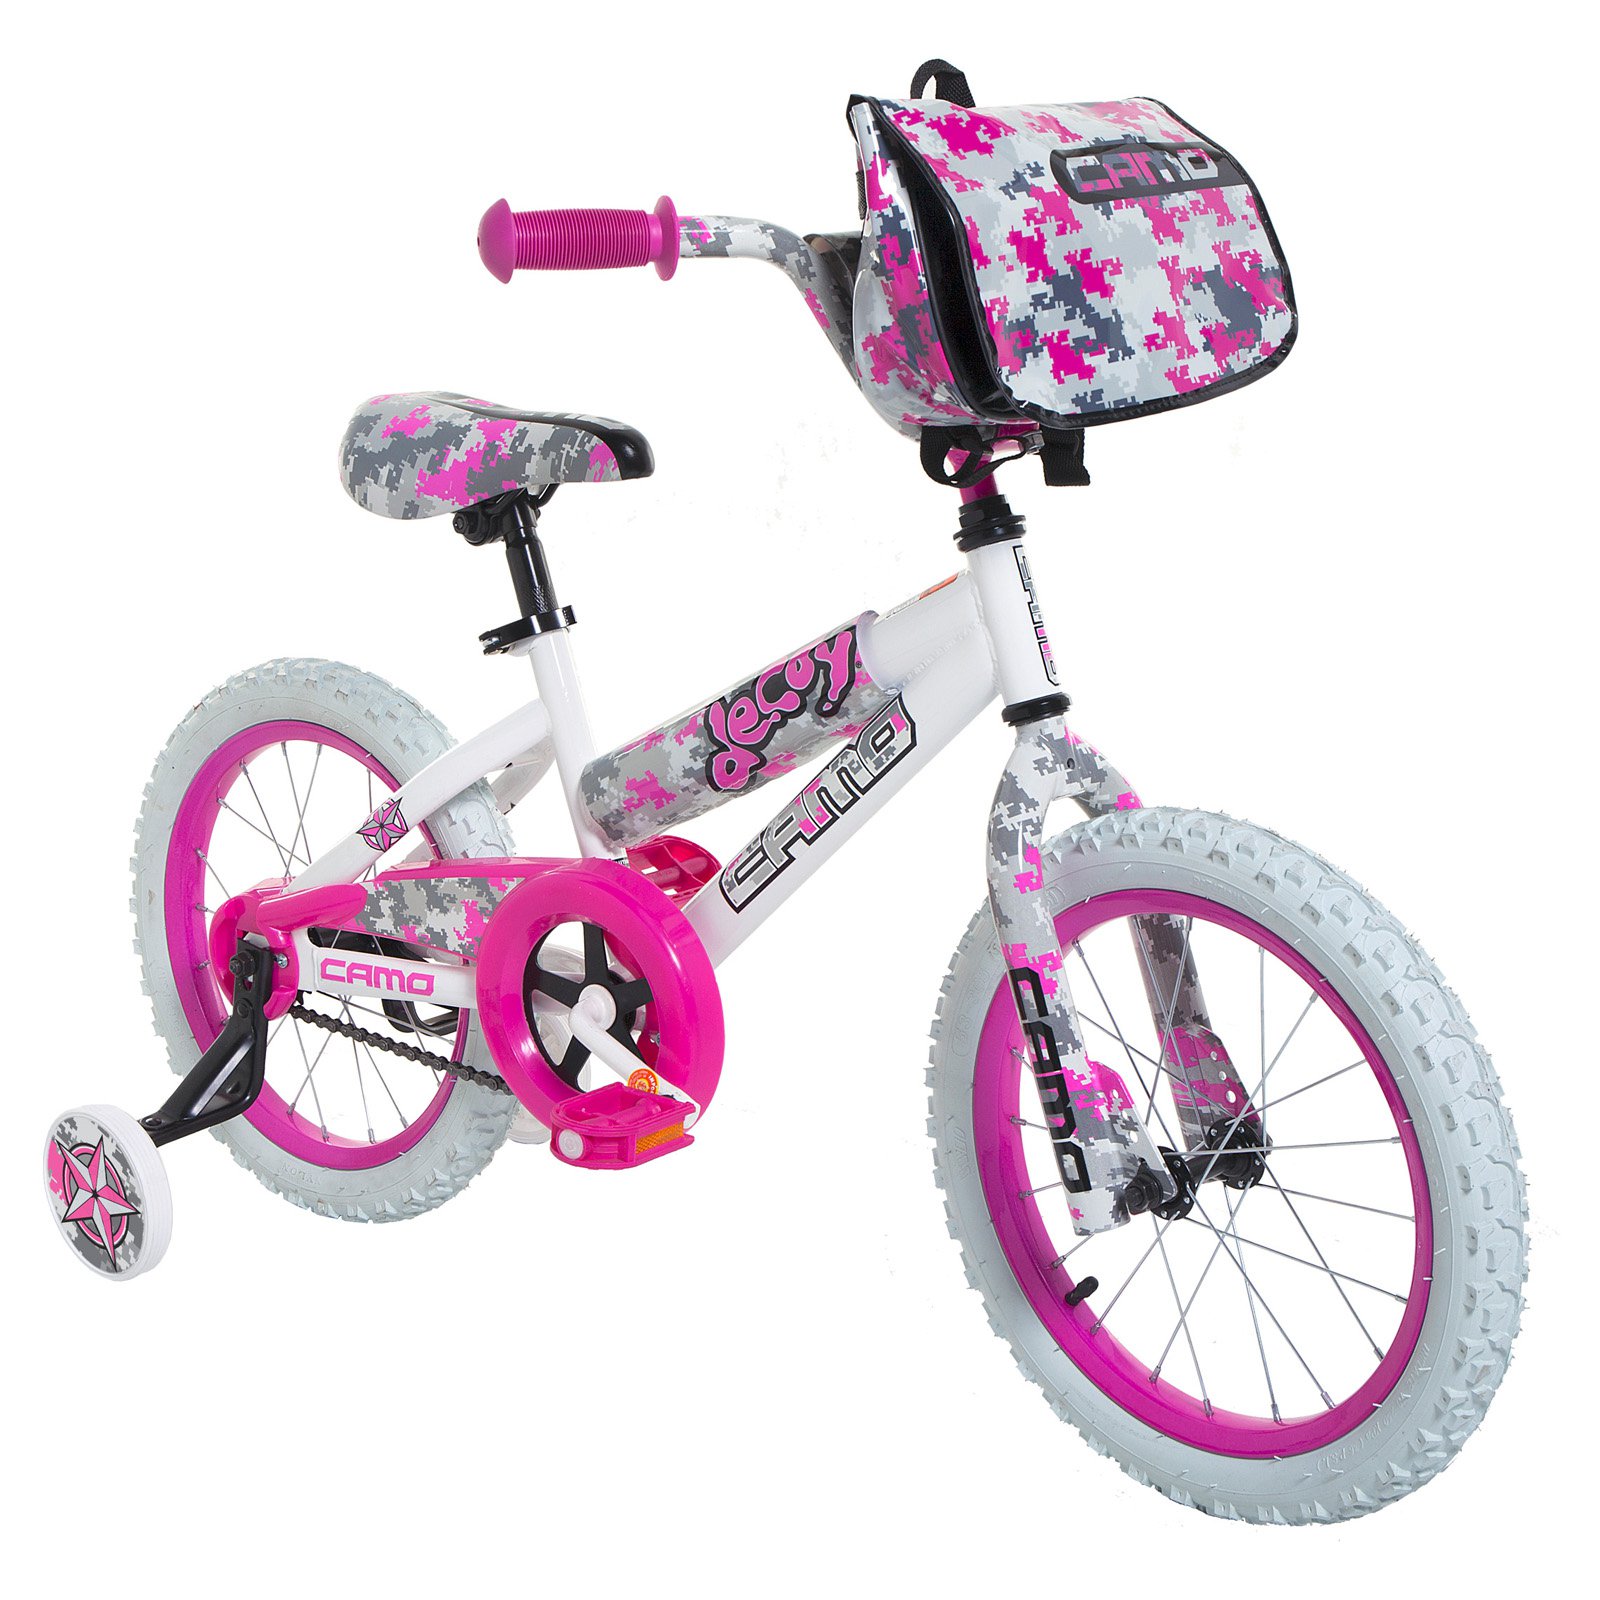 16" Camo Decoy Girls' Bike - image 1 of 4